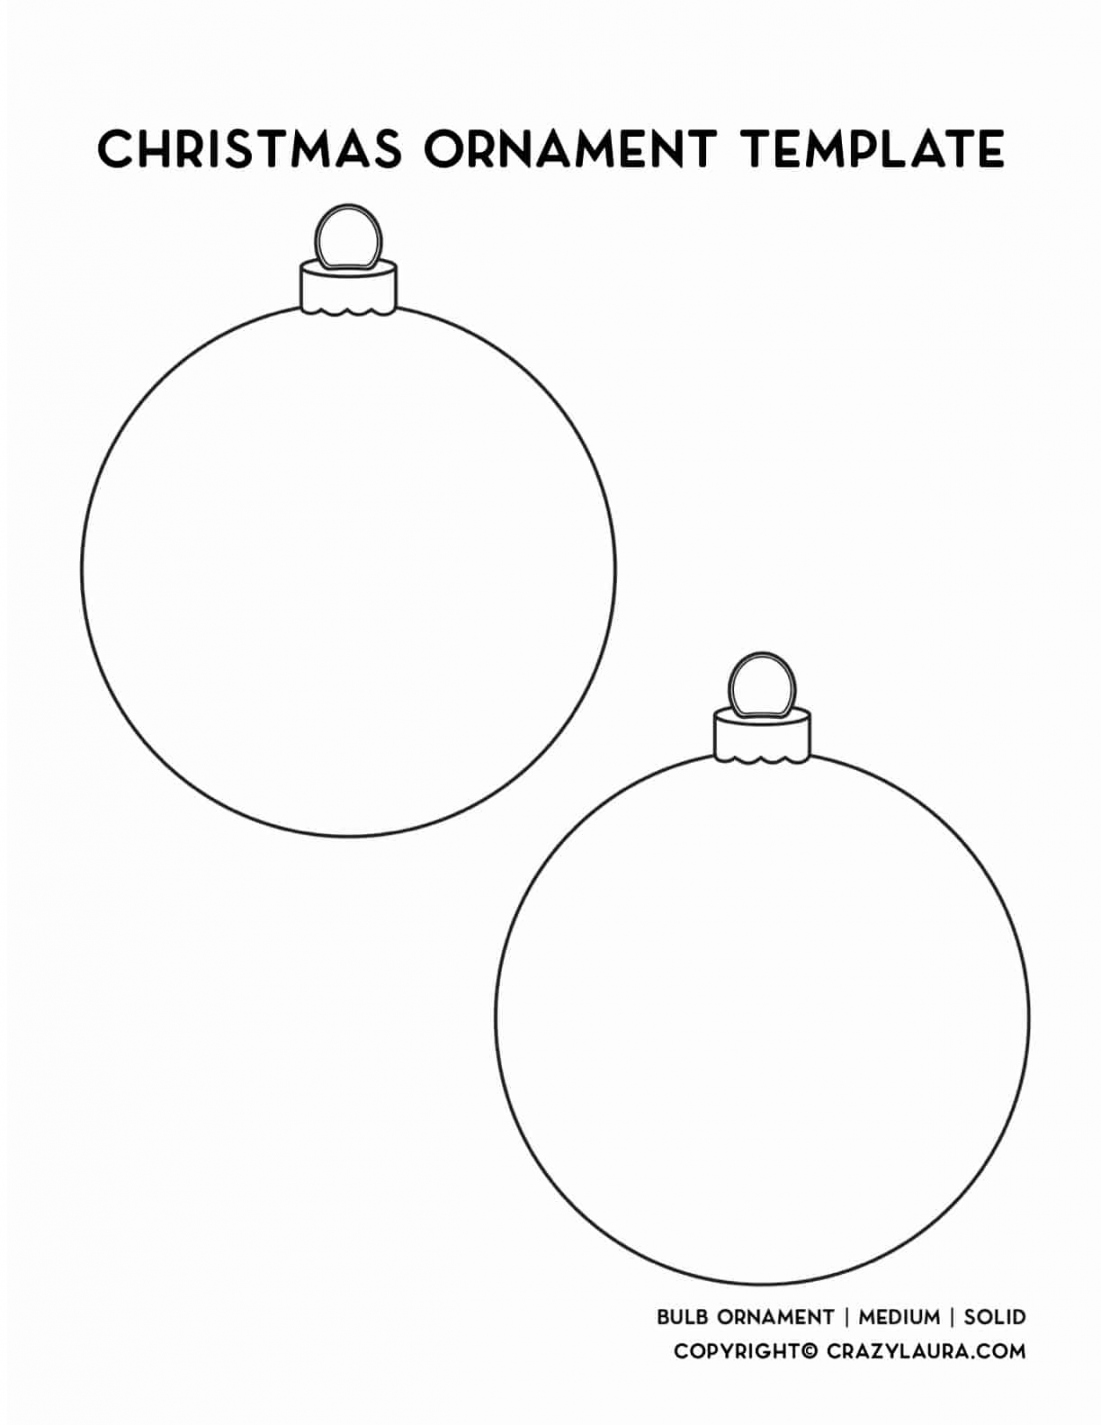 Free Christmas Ornament Template Printables & Outlines - Crazy Laura - FREE Printables - Ornament Template